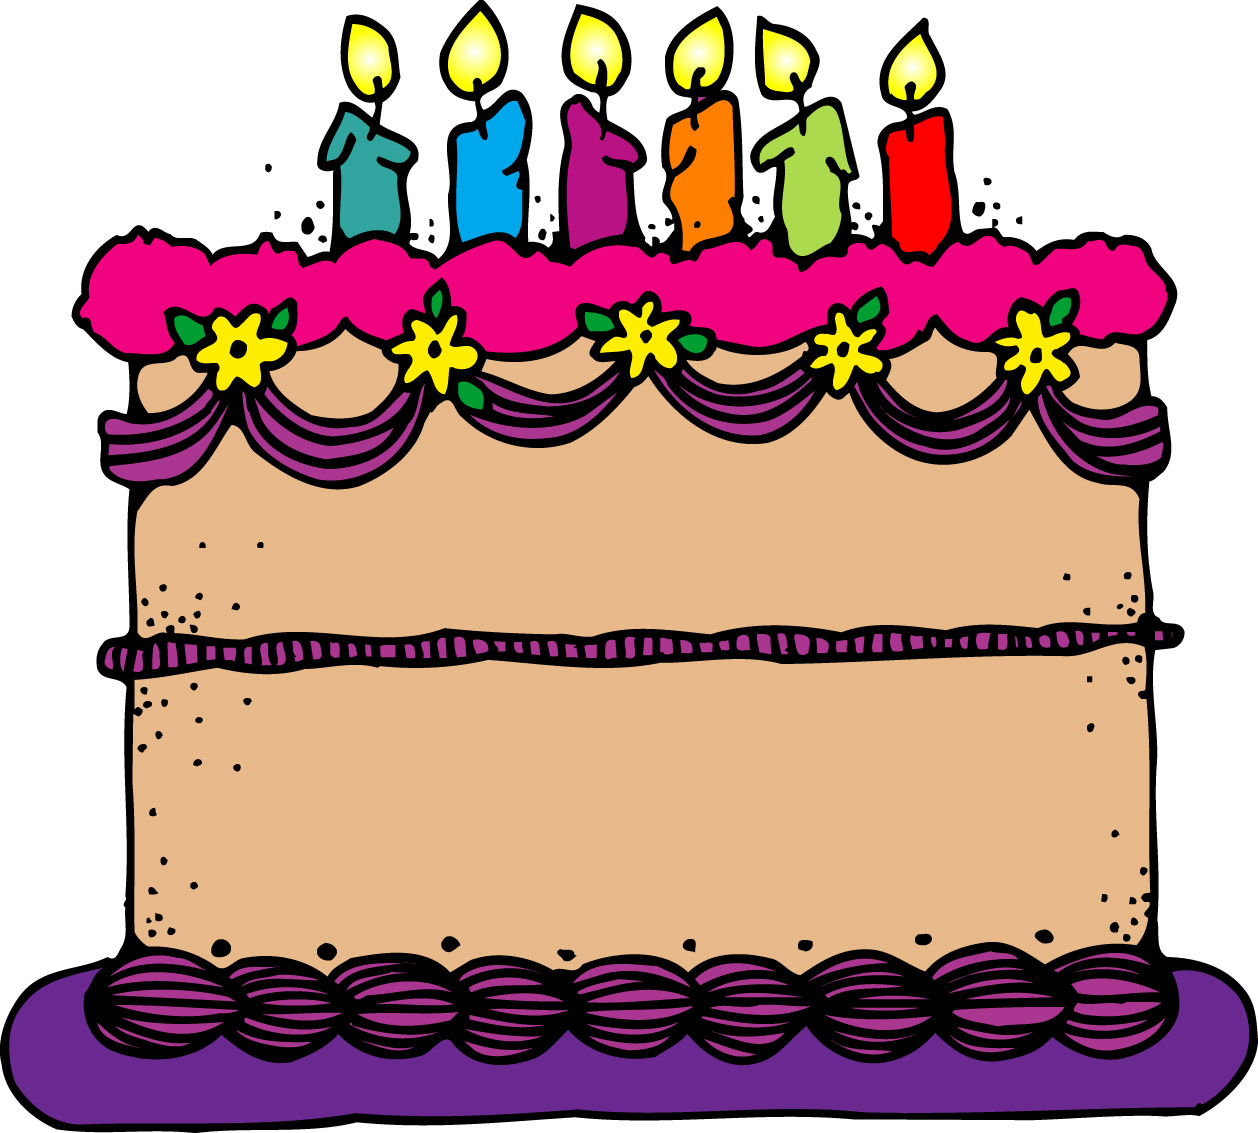 Animated Birthday Cake Clip Art Clipart Best